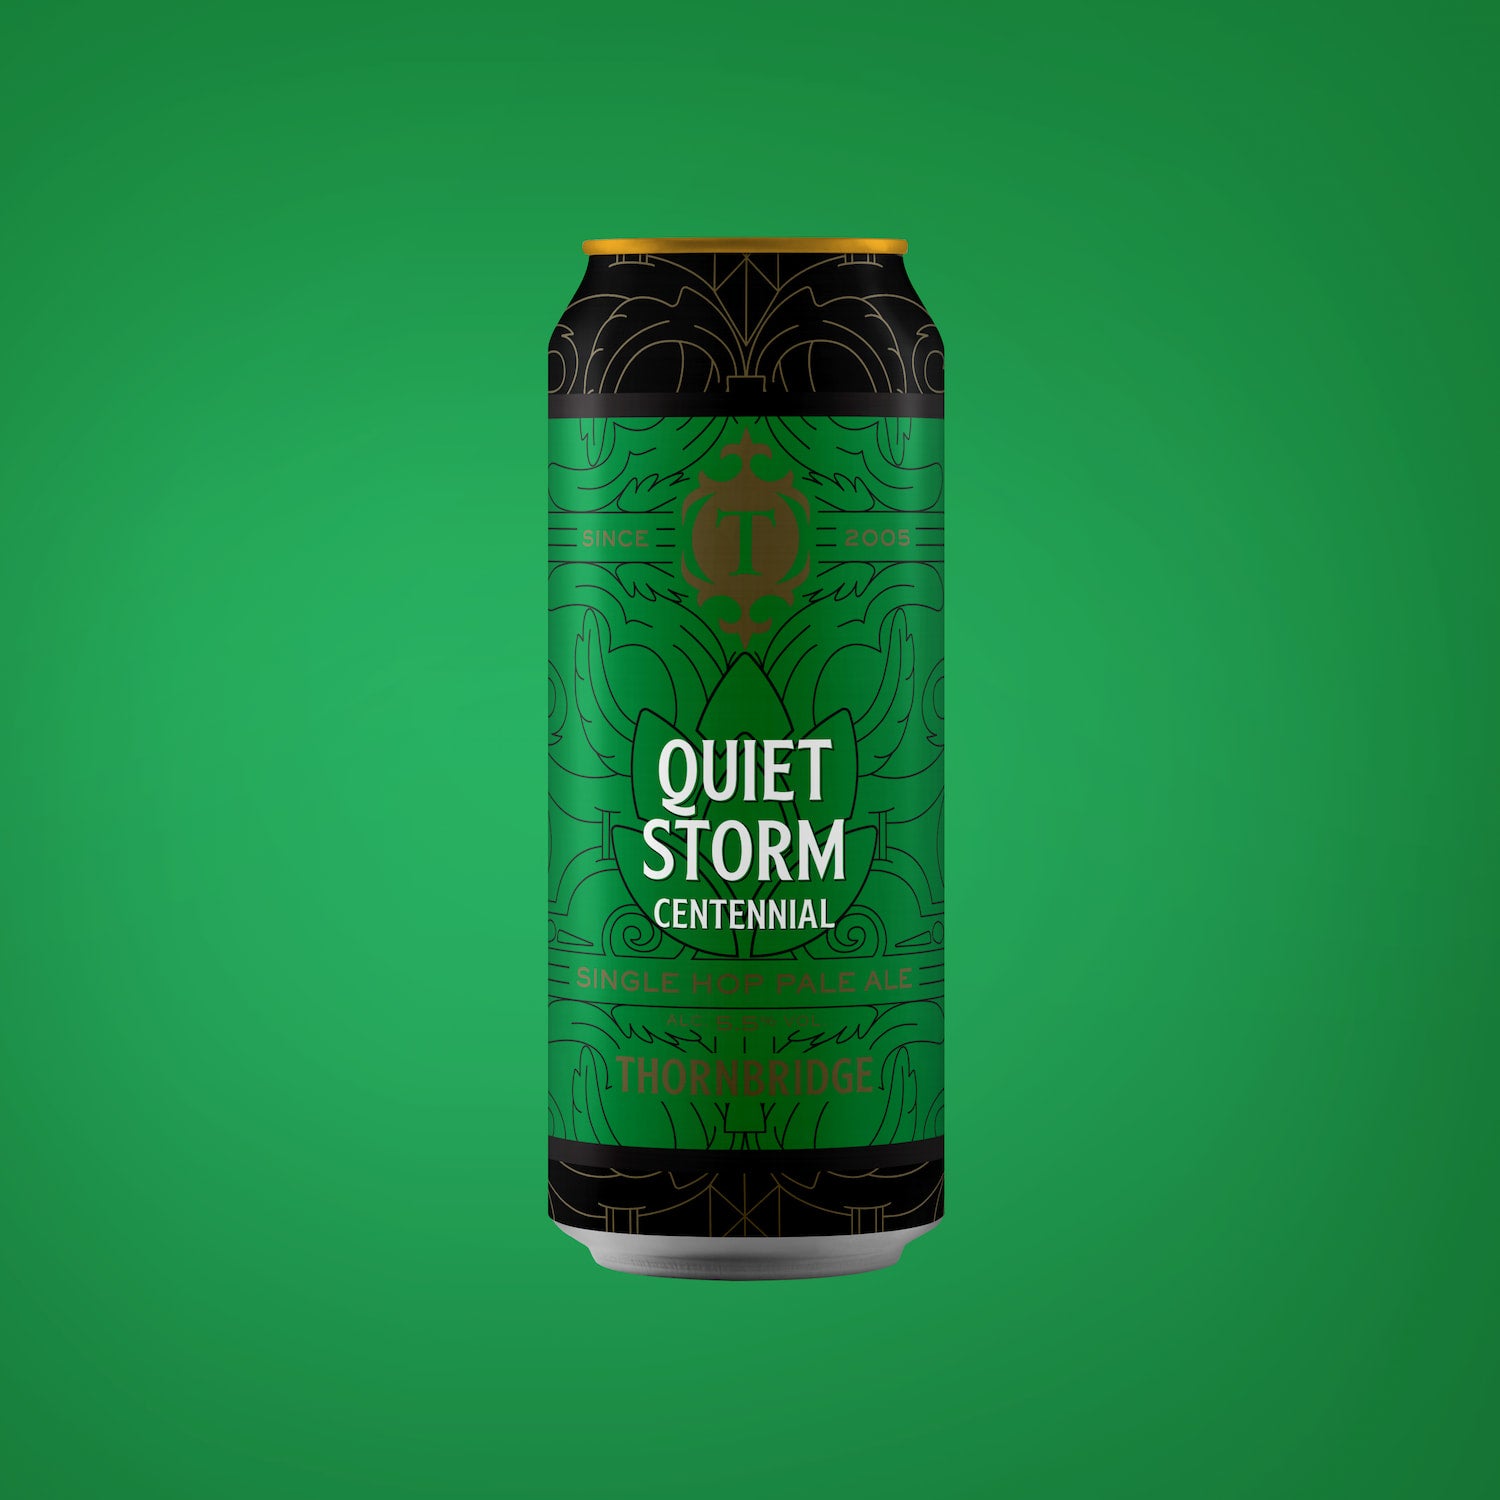 Quiet Storm Centennial, 5.5% Single Hopped Pale Ale Beer - Single Can Thornbridge